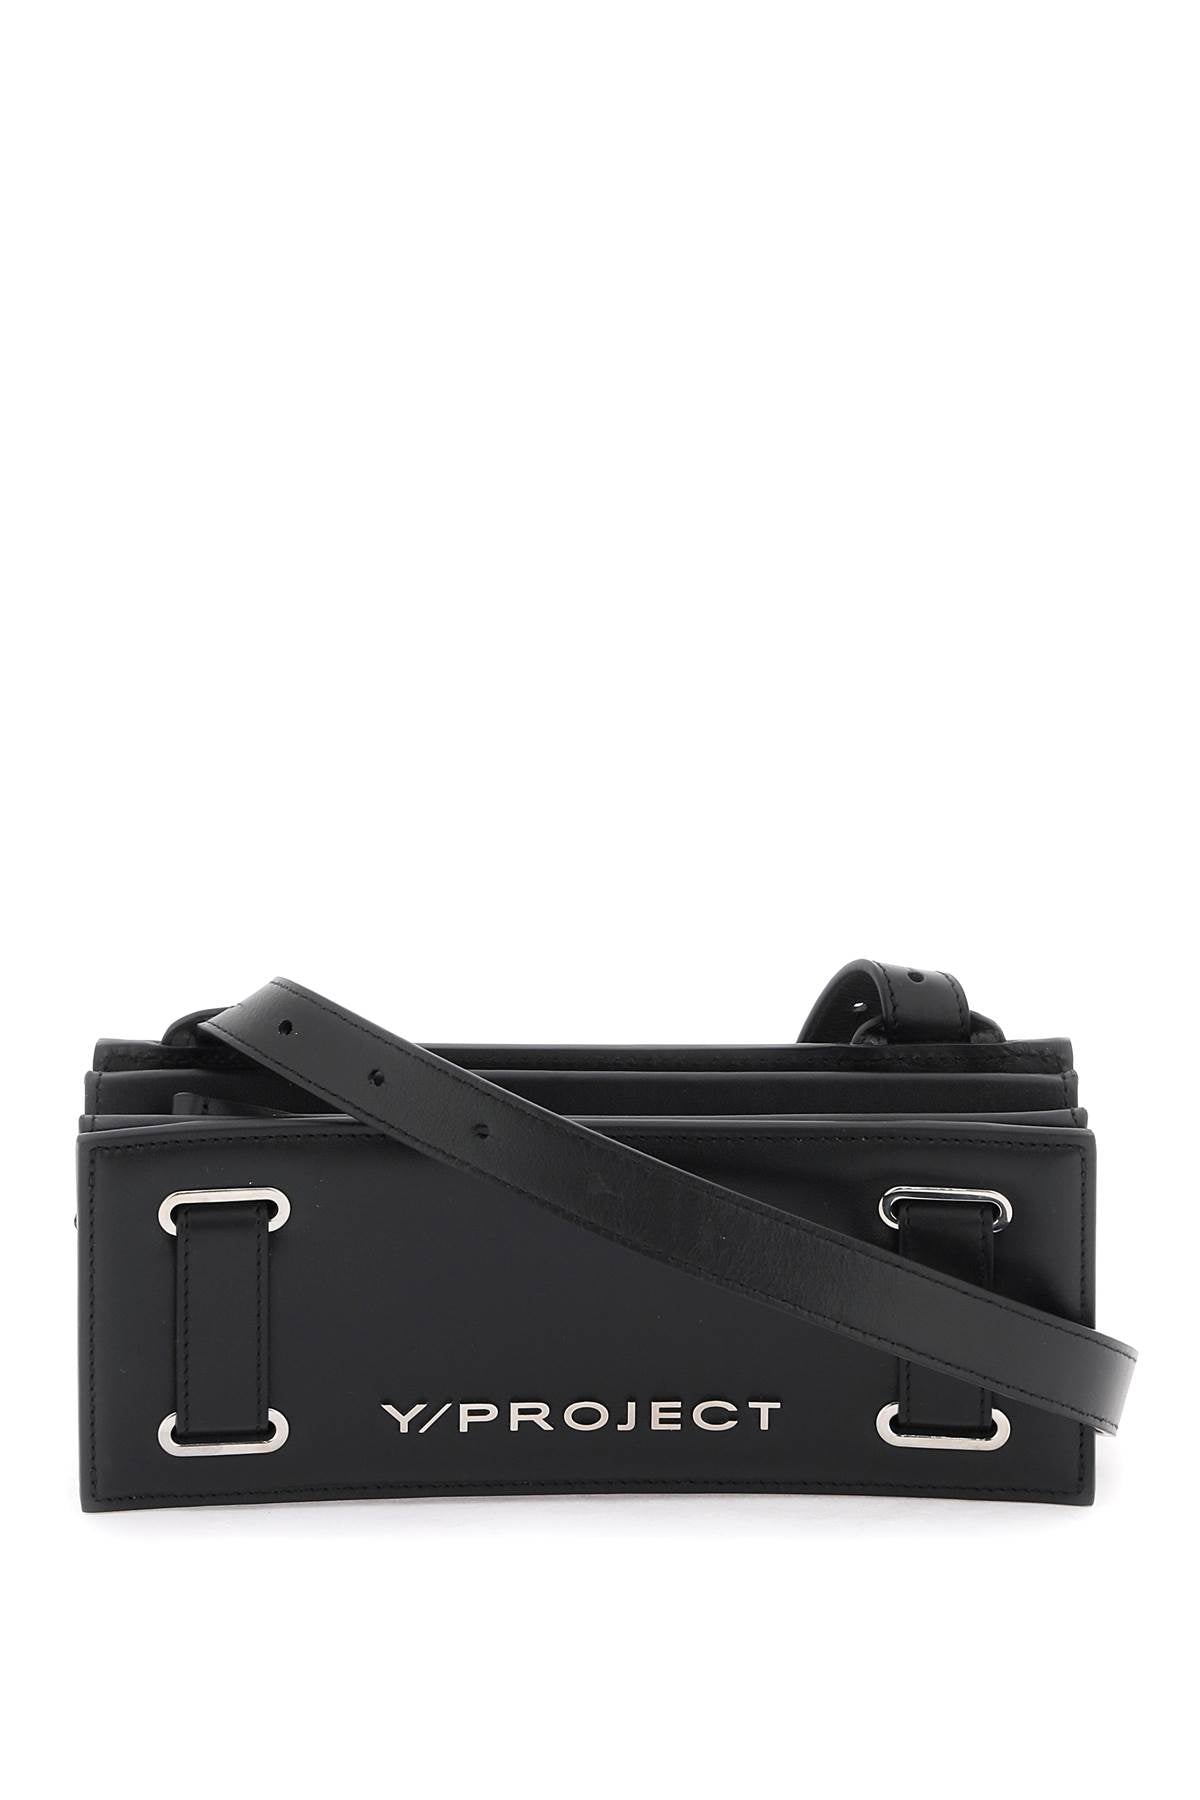 Y project 'mini accordion' crossbody bag WBAG6BMINI S24 S23 BLACK